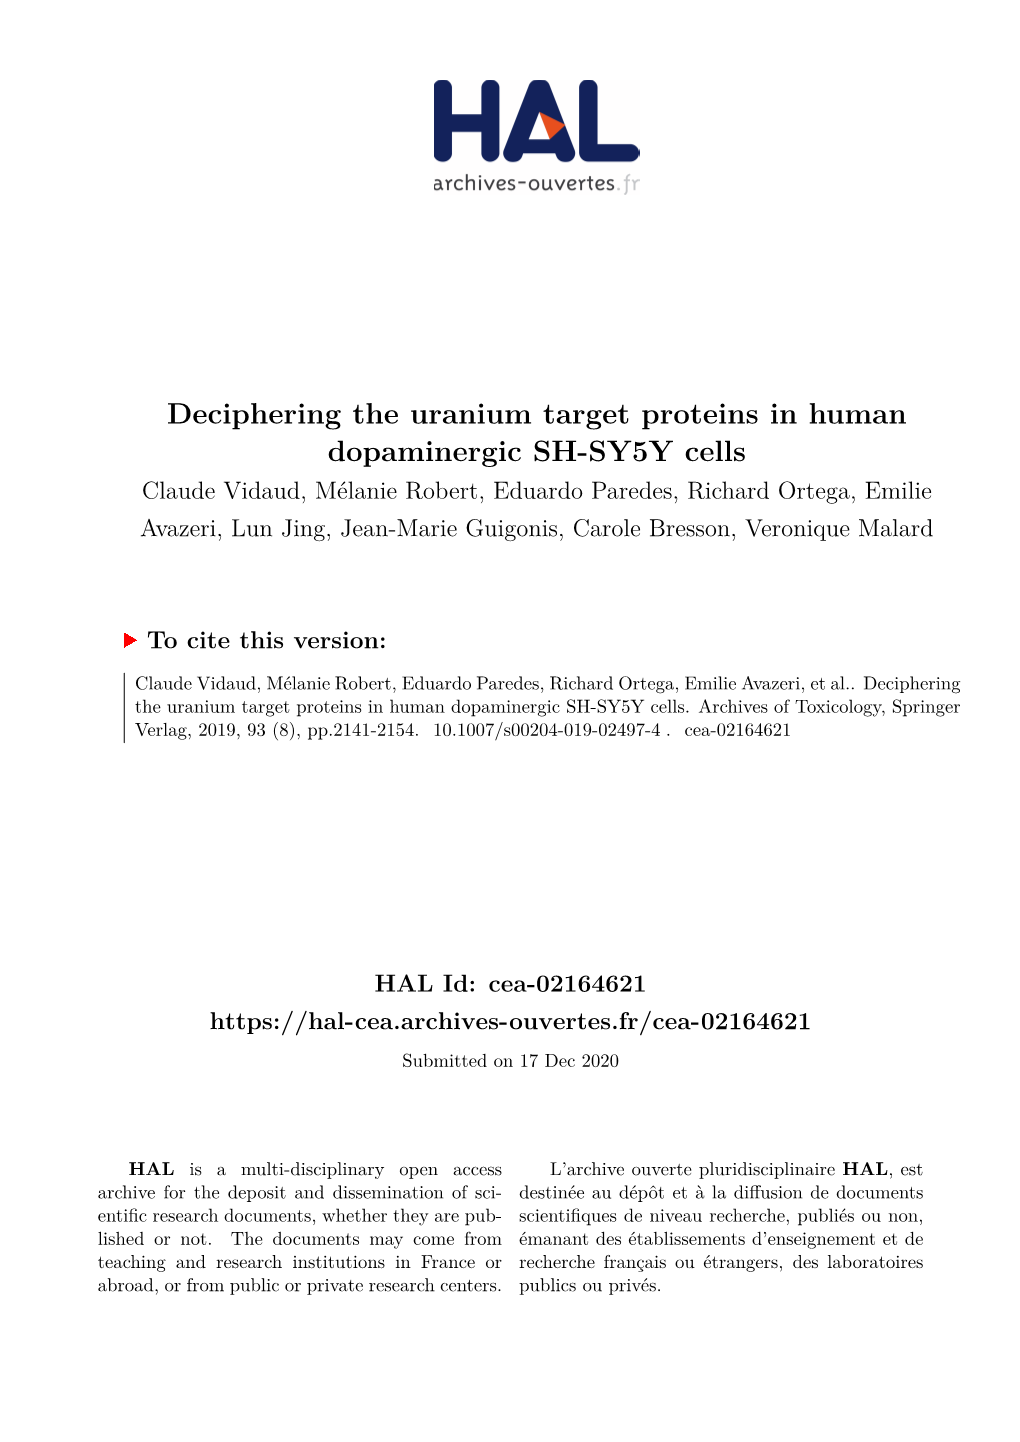 Deciphering the Uranium Target Proteins in Human Dopaminergic